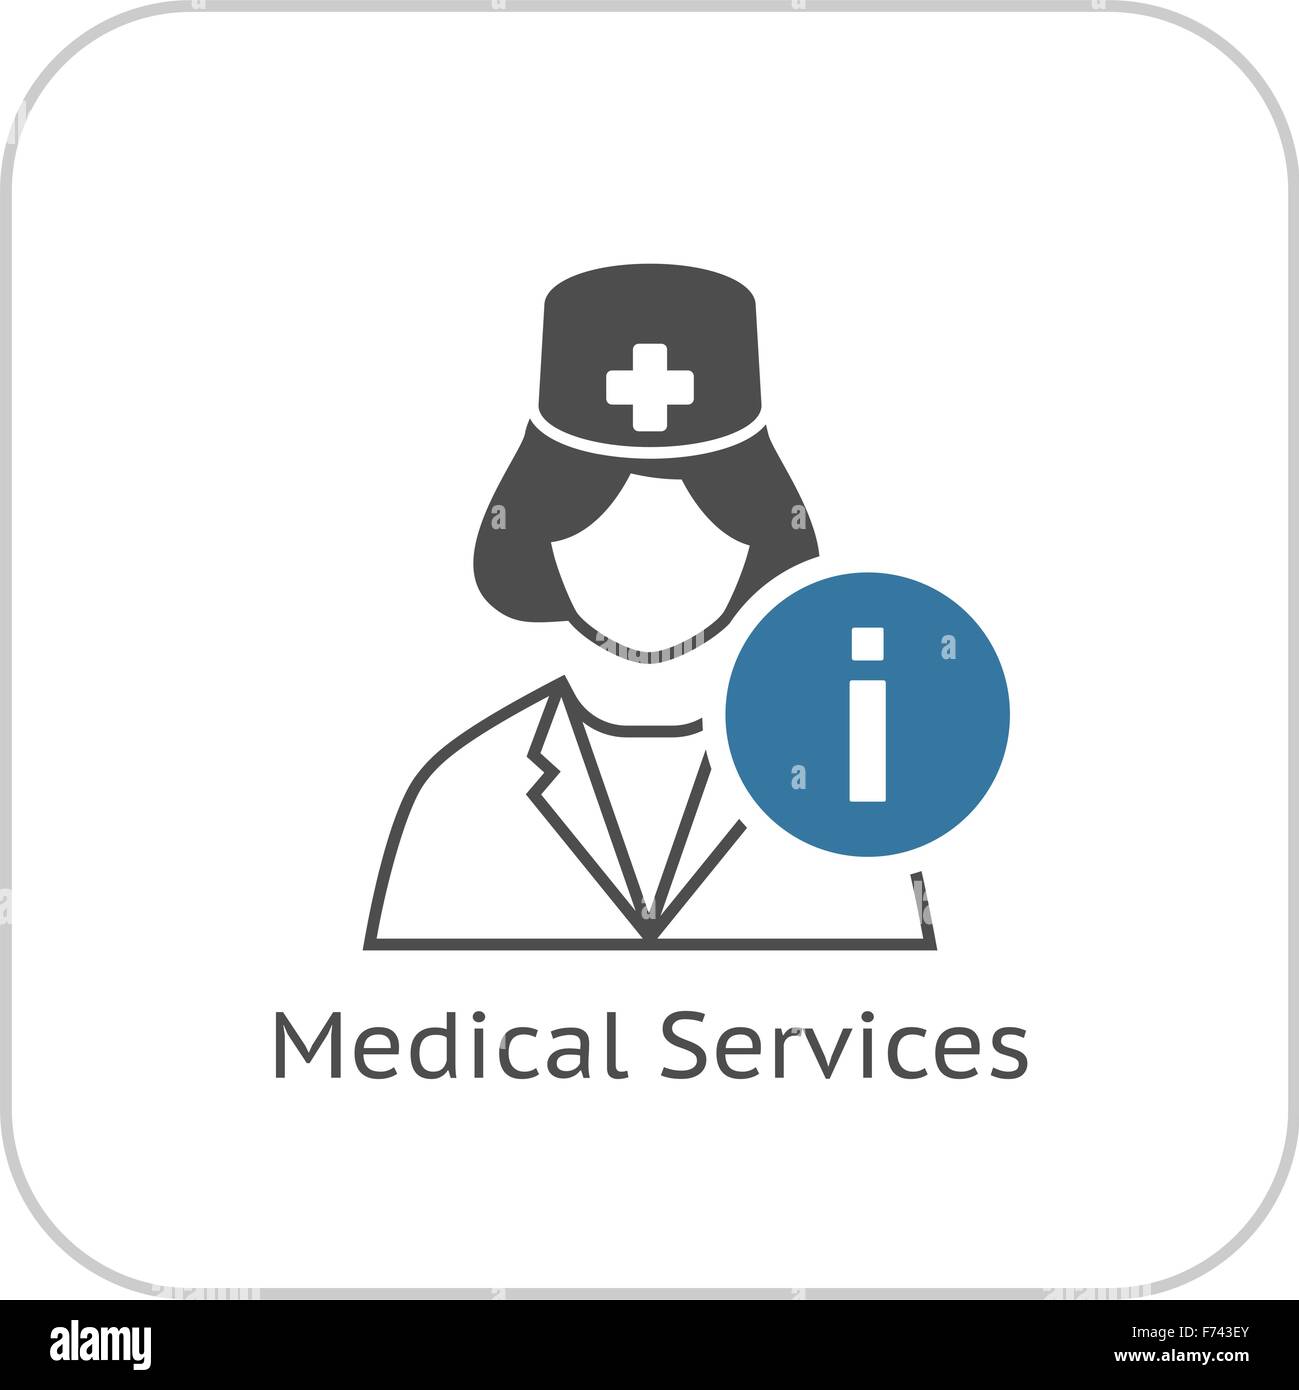 Medical Services Icon. Flat Design. Stock Vector